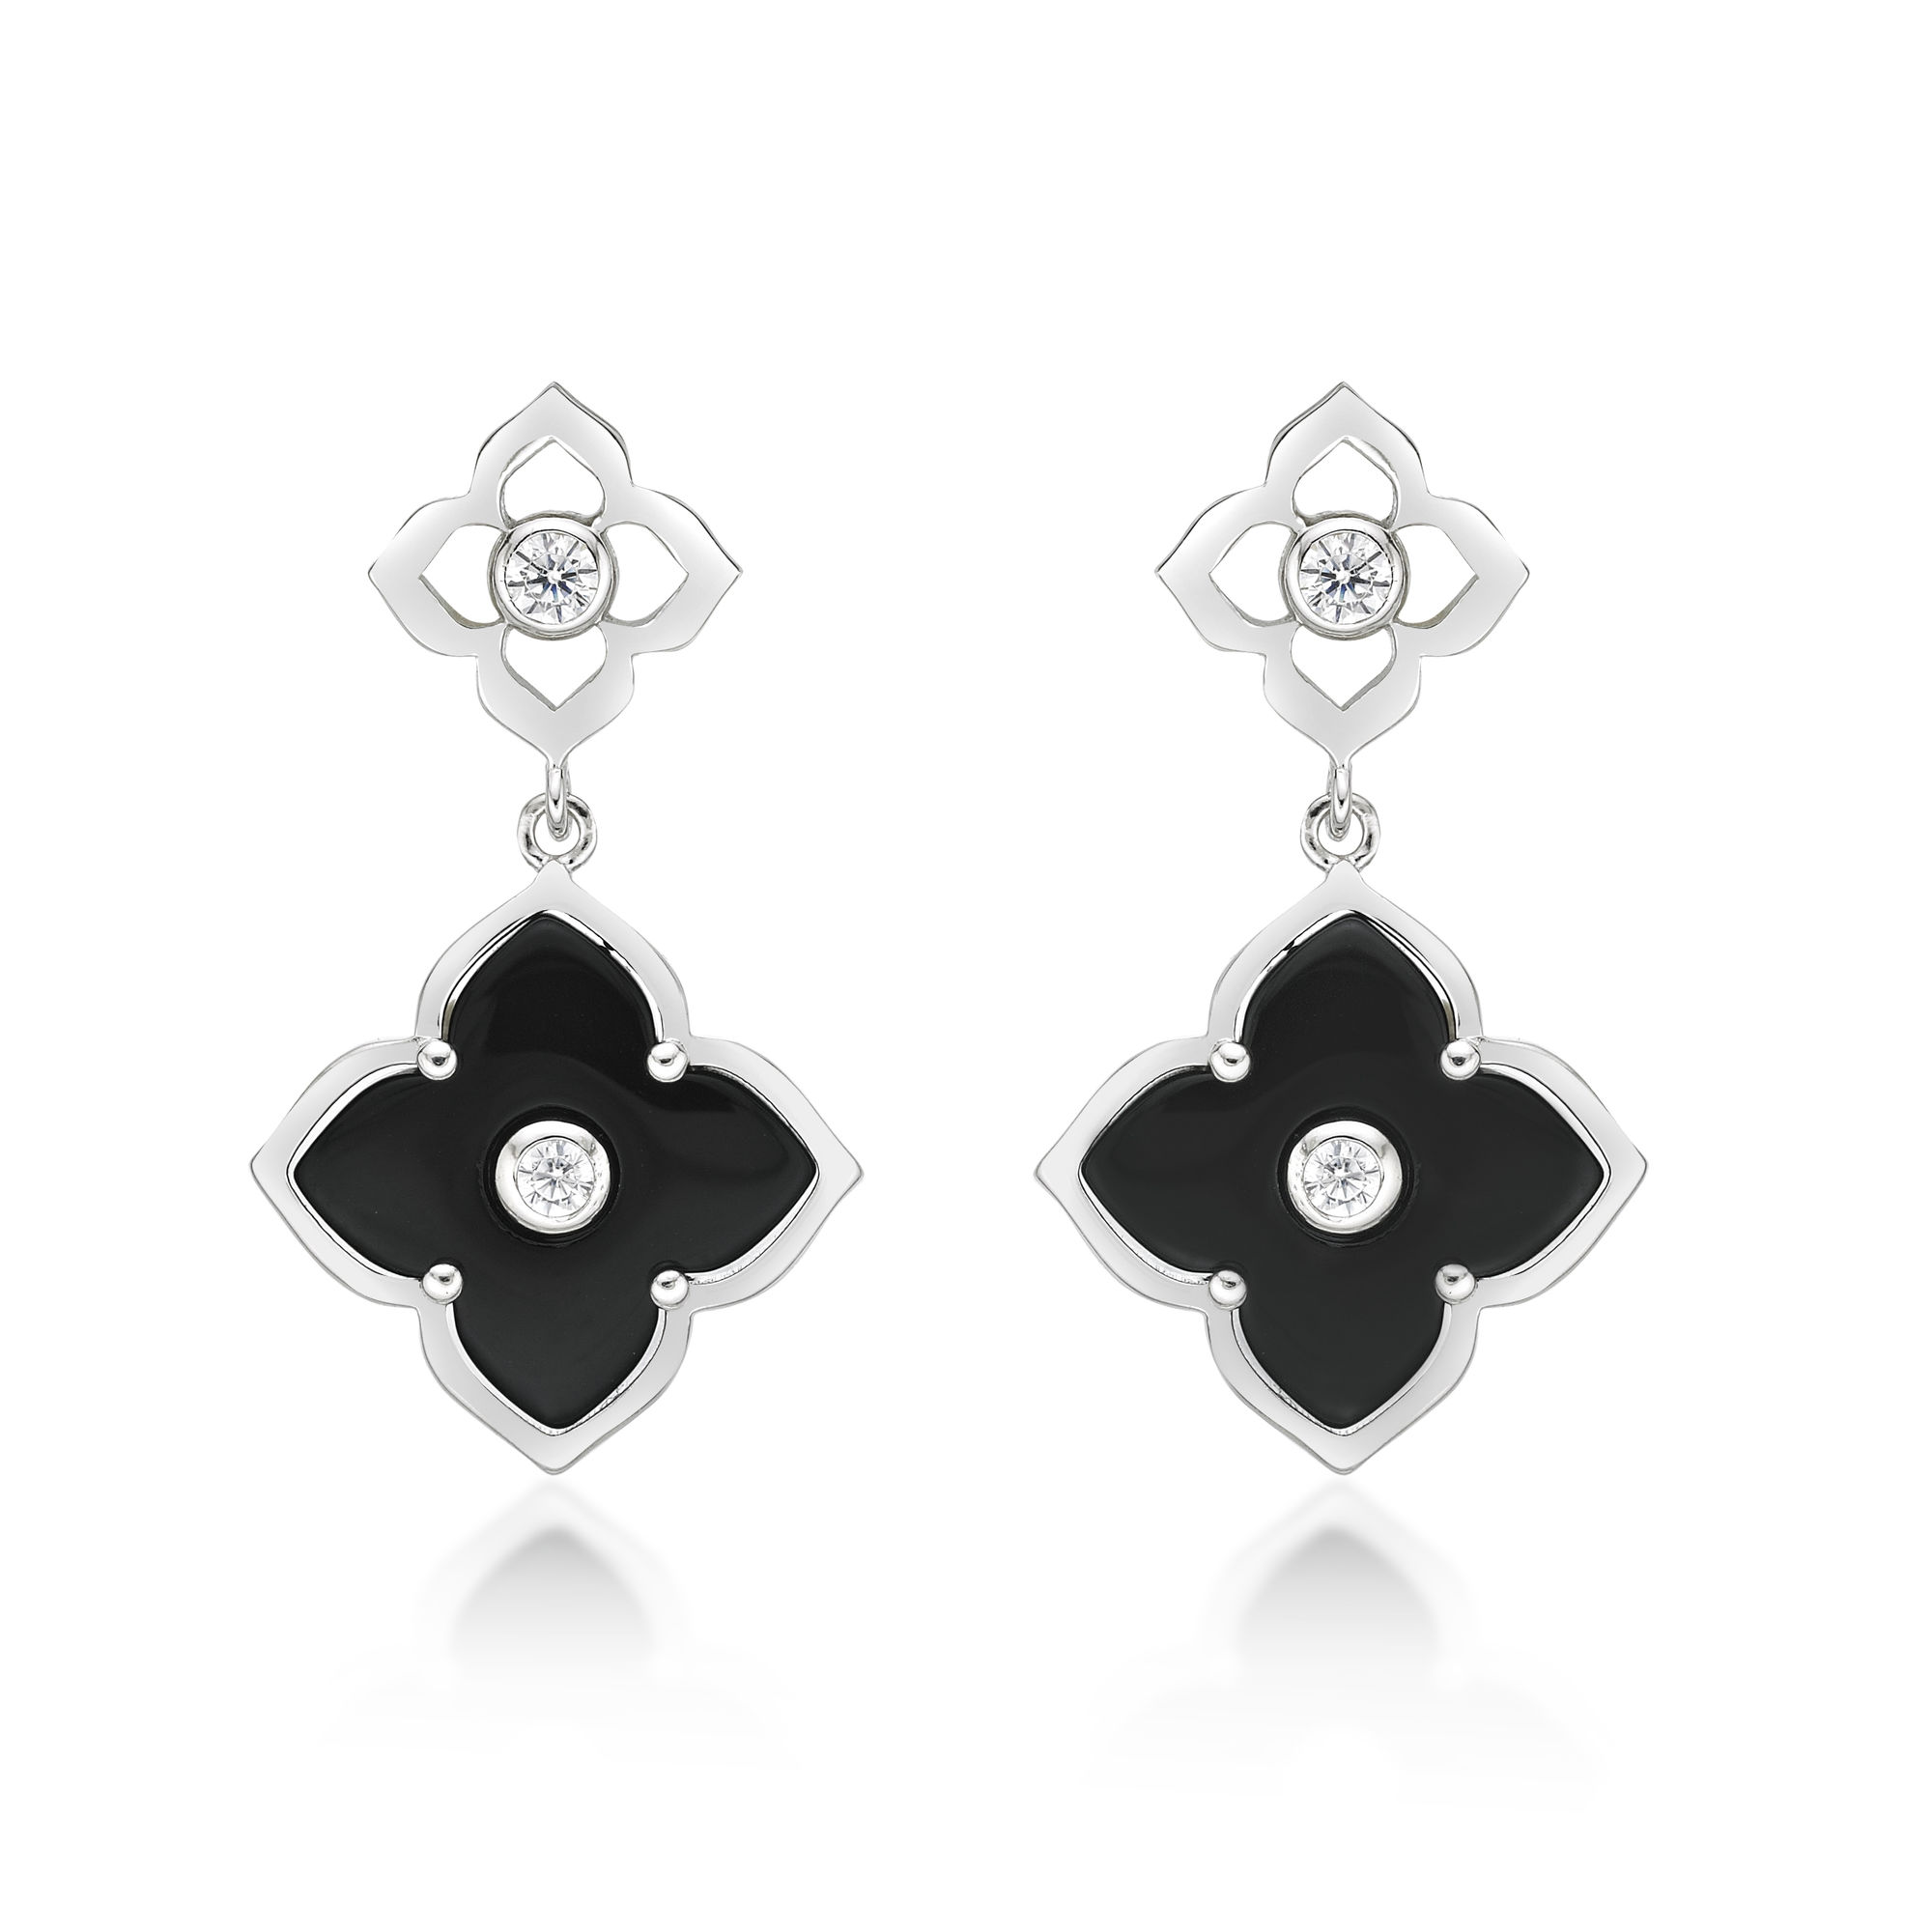 Lavari Jewelers Women's Black Onyx Flower Dangle Drop Earrings with Post Back, 925 Sterling Silver, Cubic Zirconia